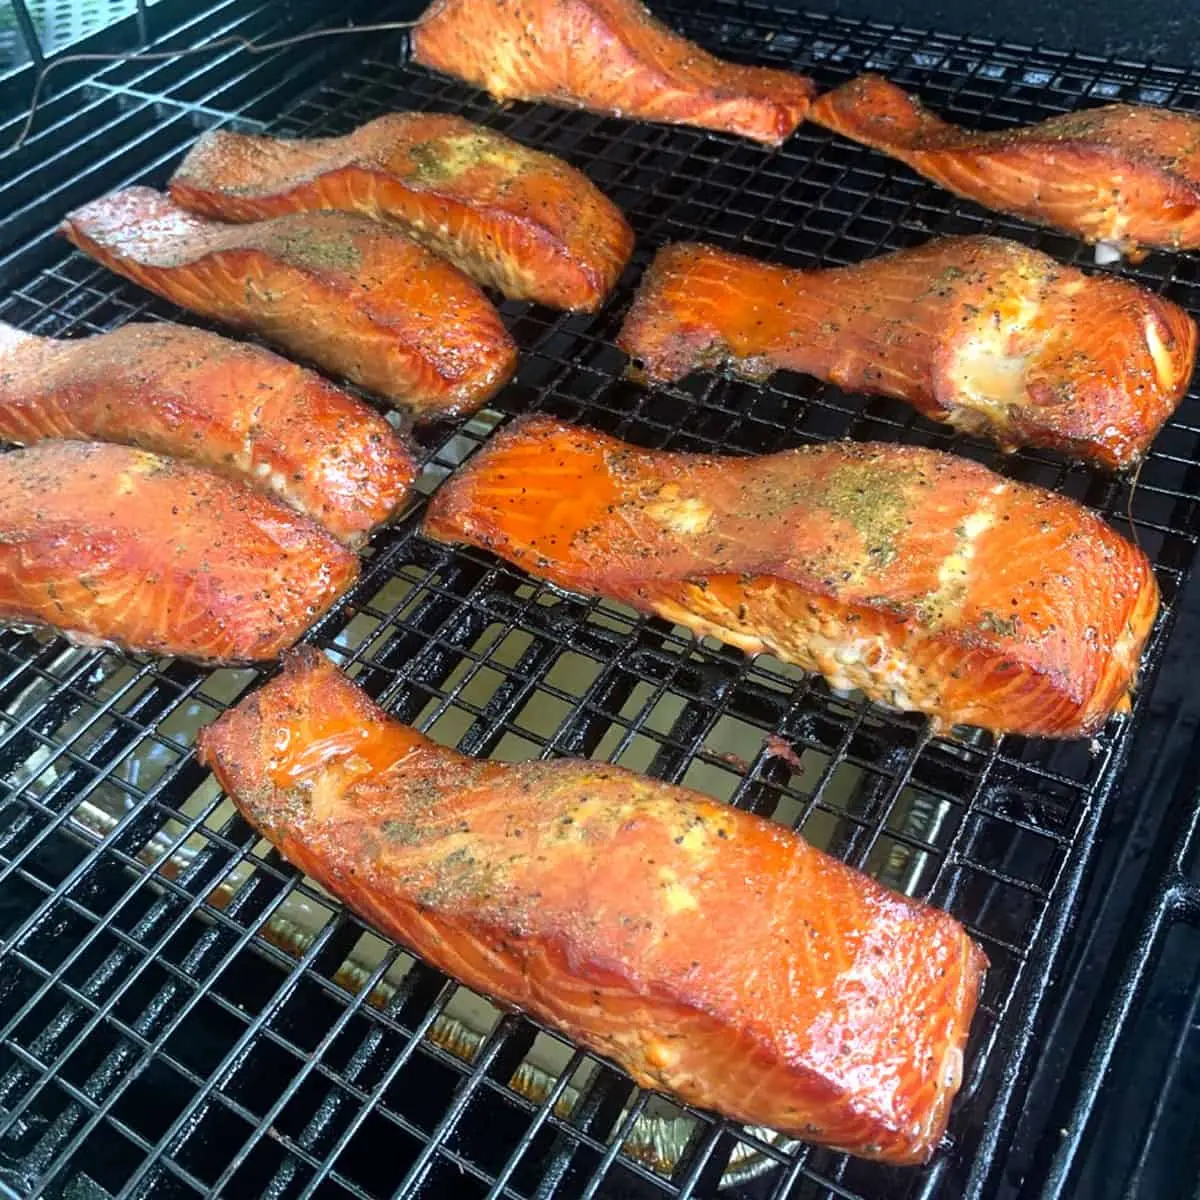 smoked salmon offset smoker - Can you smoke fish in an offset smoker